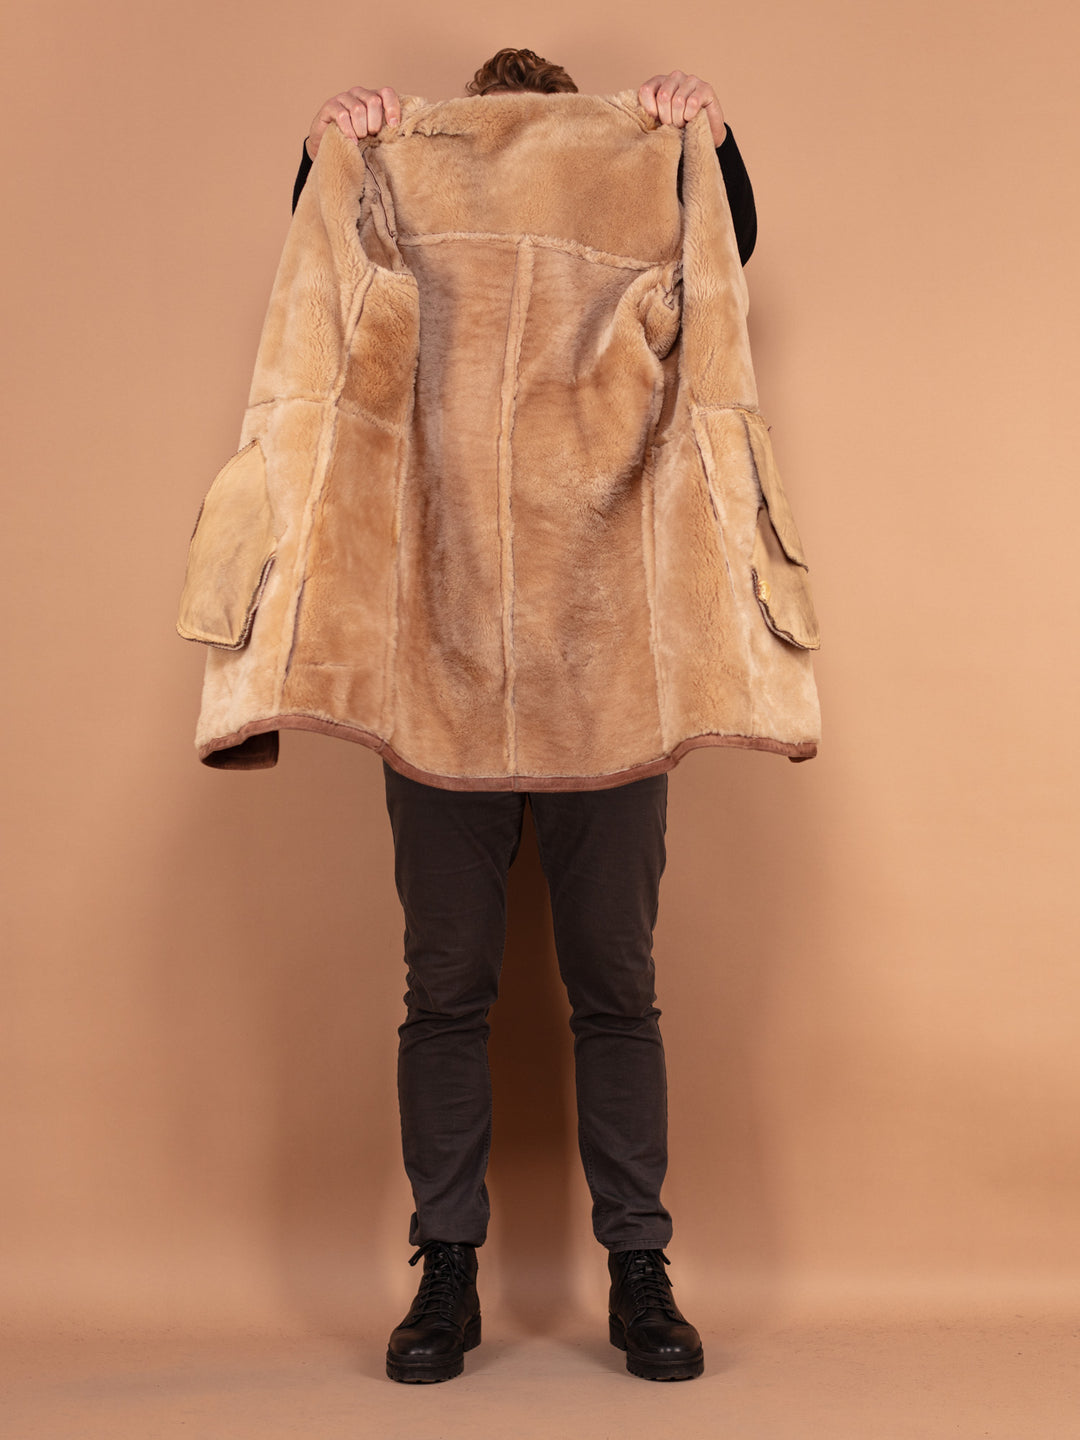 Sheepskin Suede Coat 70's, Size Medium, Vintage Men Winter Coat, Single Breasted Brown Retro Coat, Made in France, Boho 70s Clothing